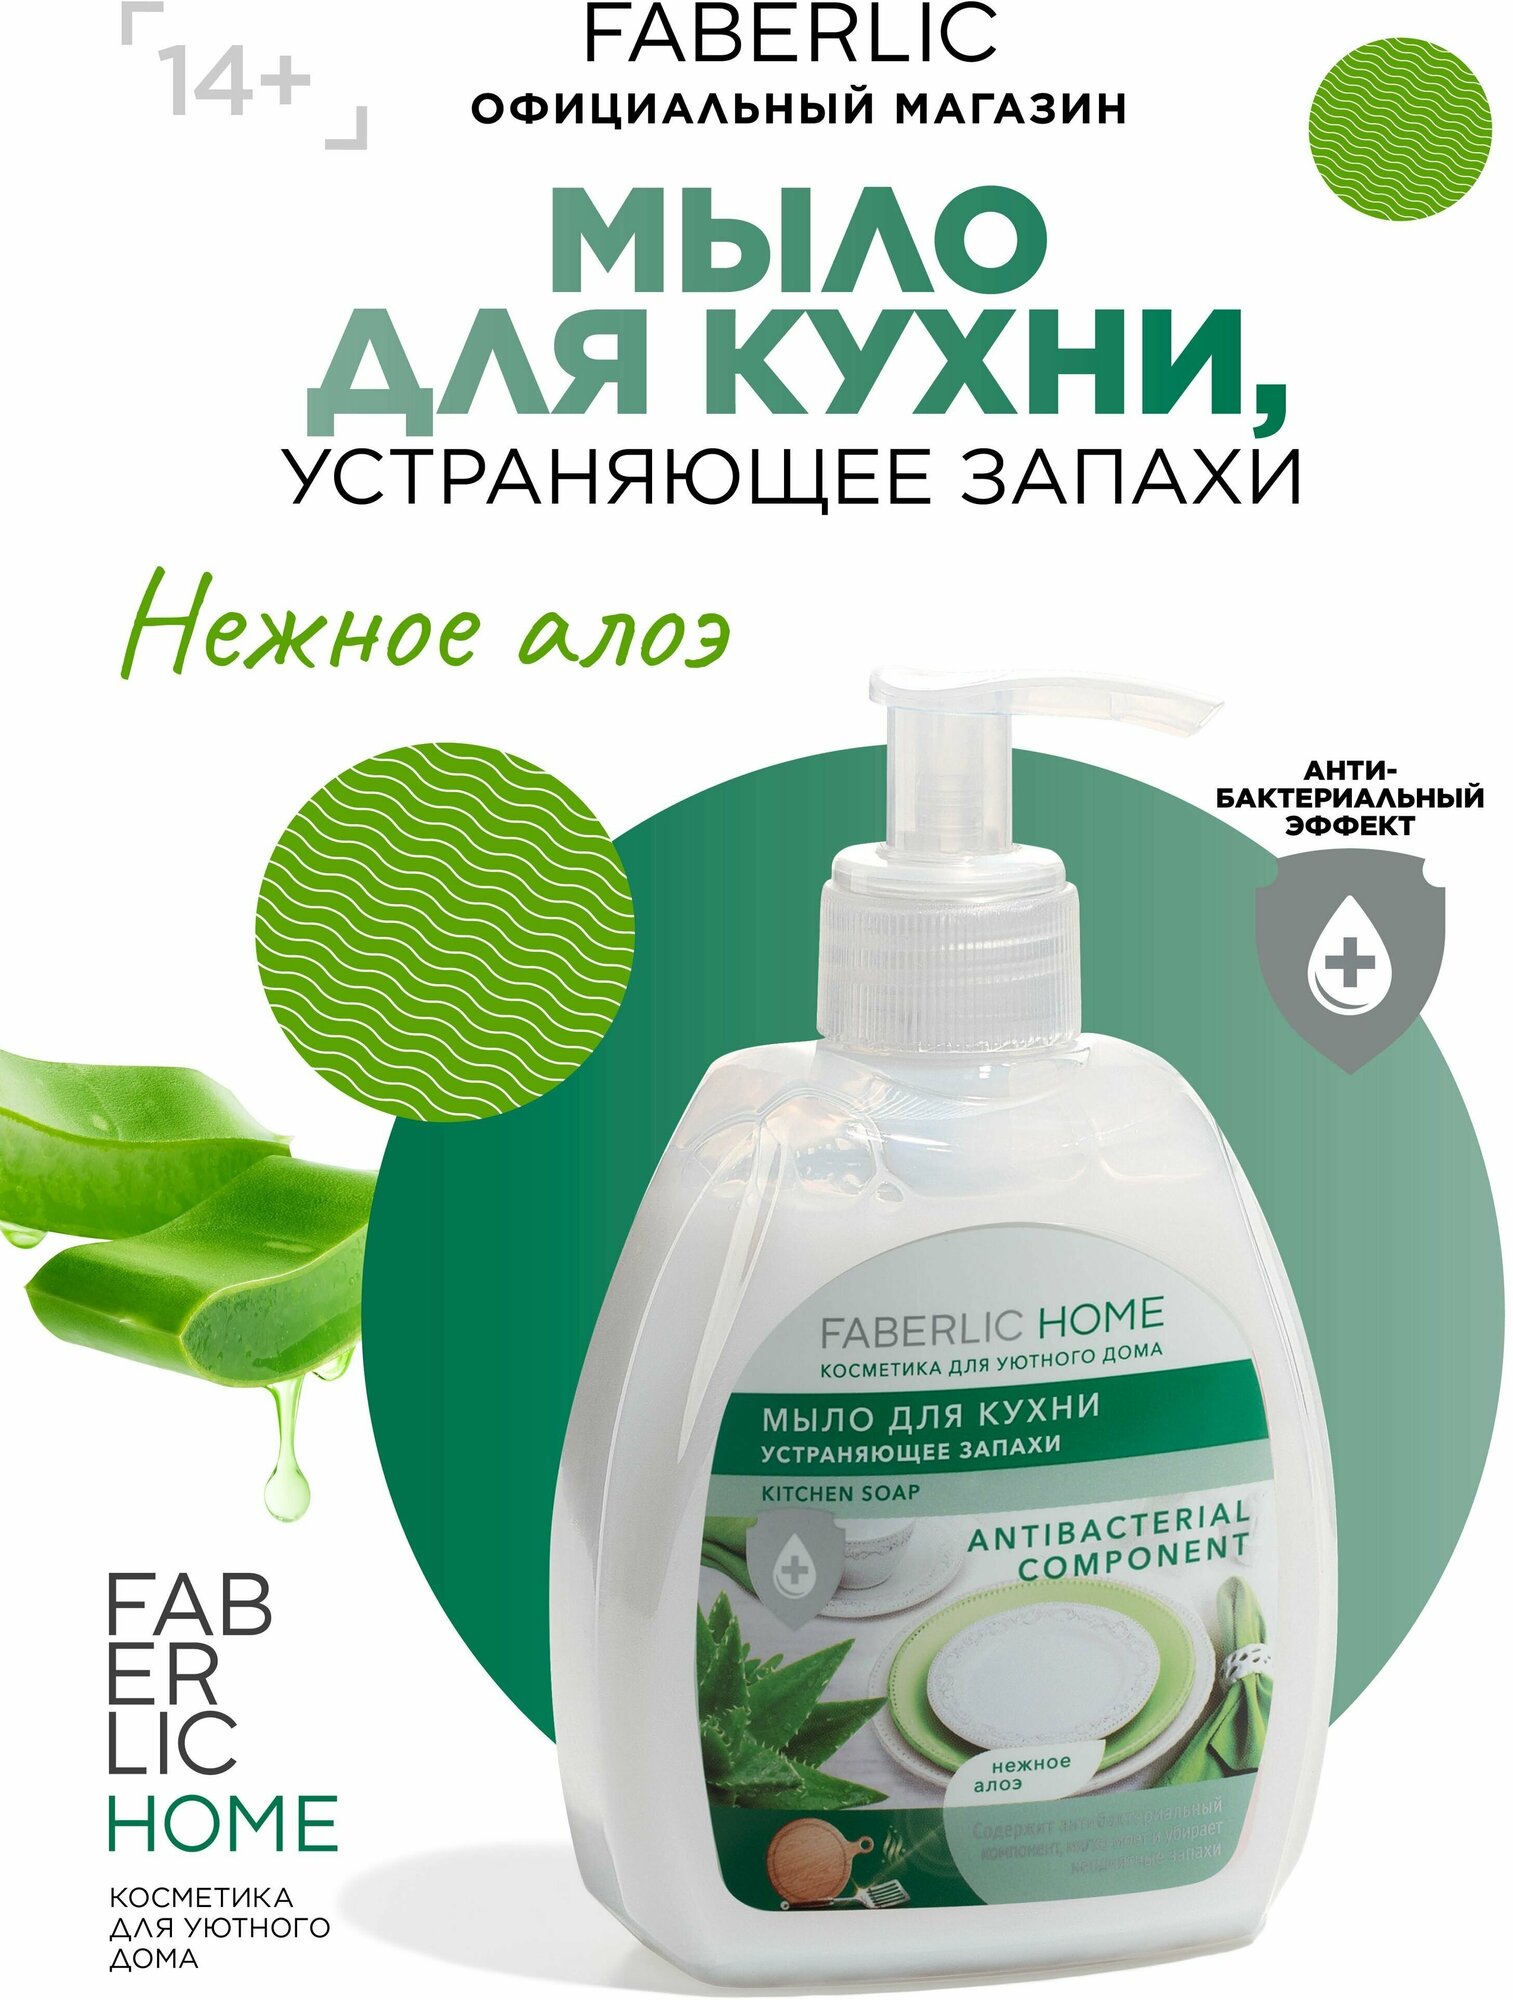 Faberlic Мыло для кухни, устраняющее запахи "Чистота и защита" FABERLIC HOME